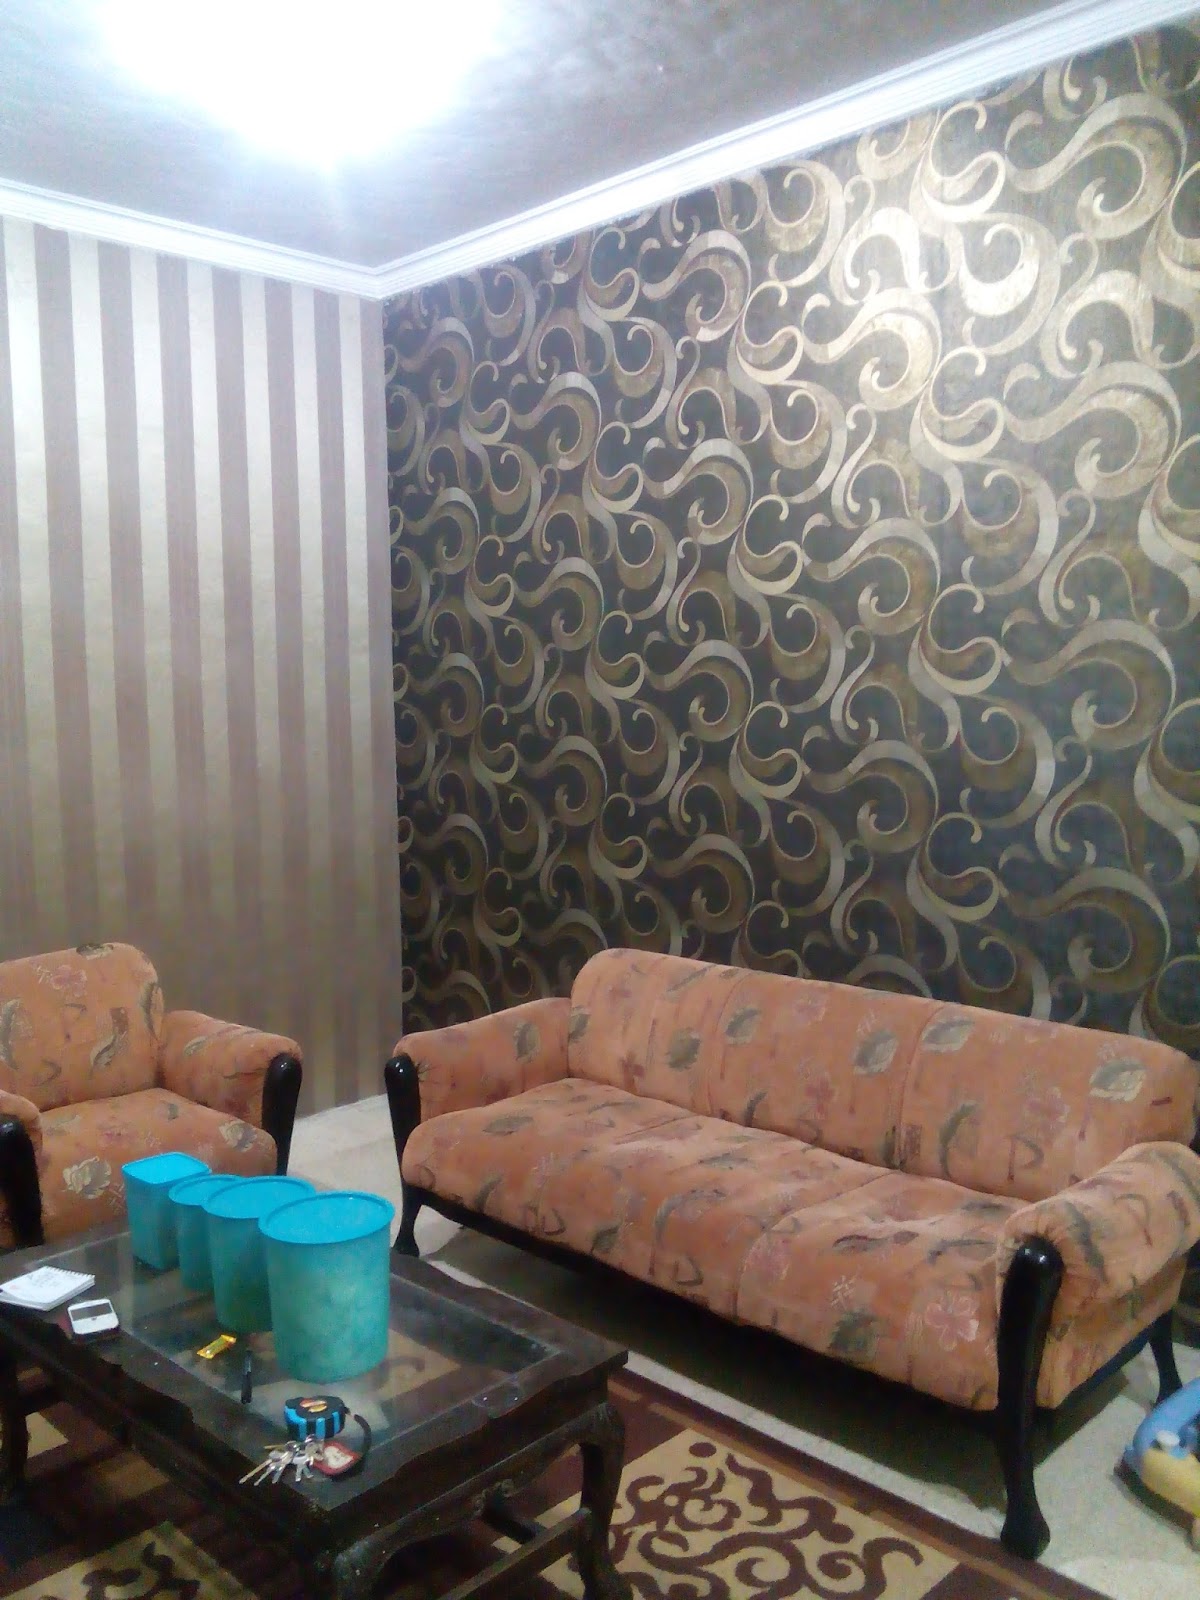 wallpaper dinding murah,parete,camera,mobilia,proprietà,divano